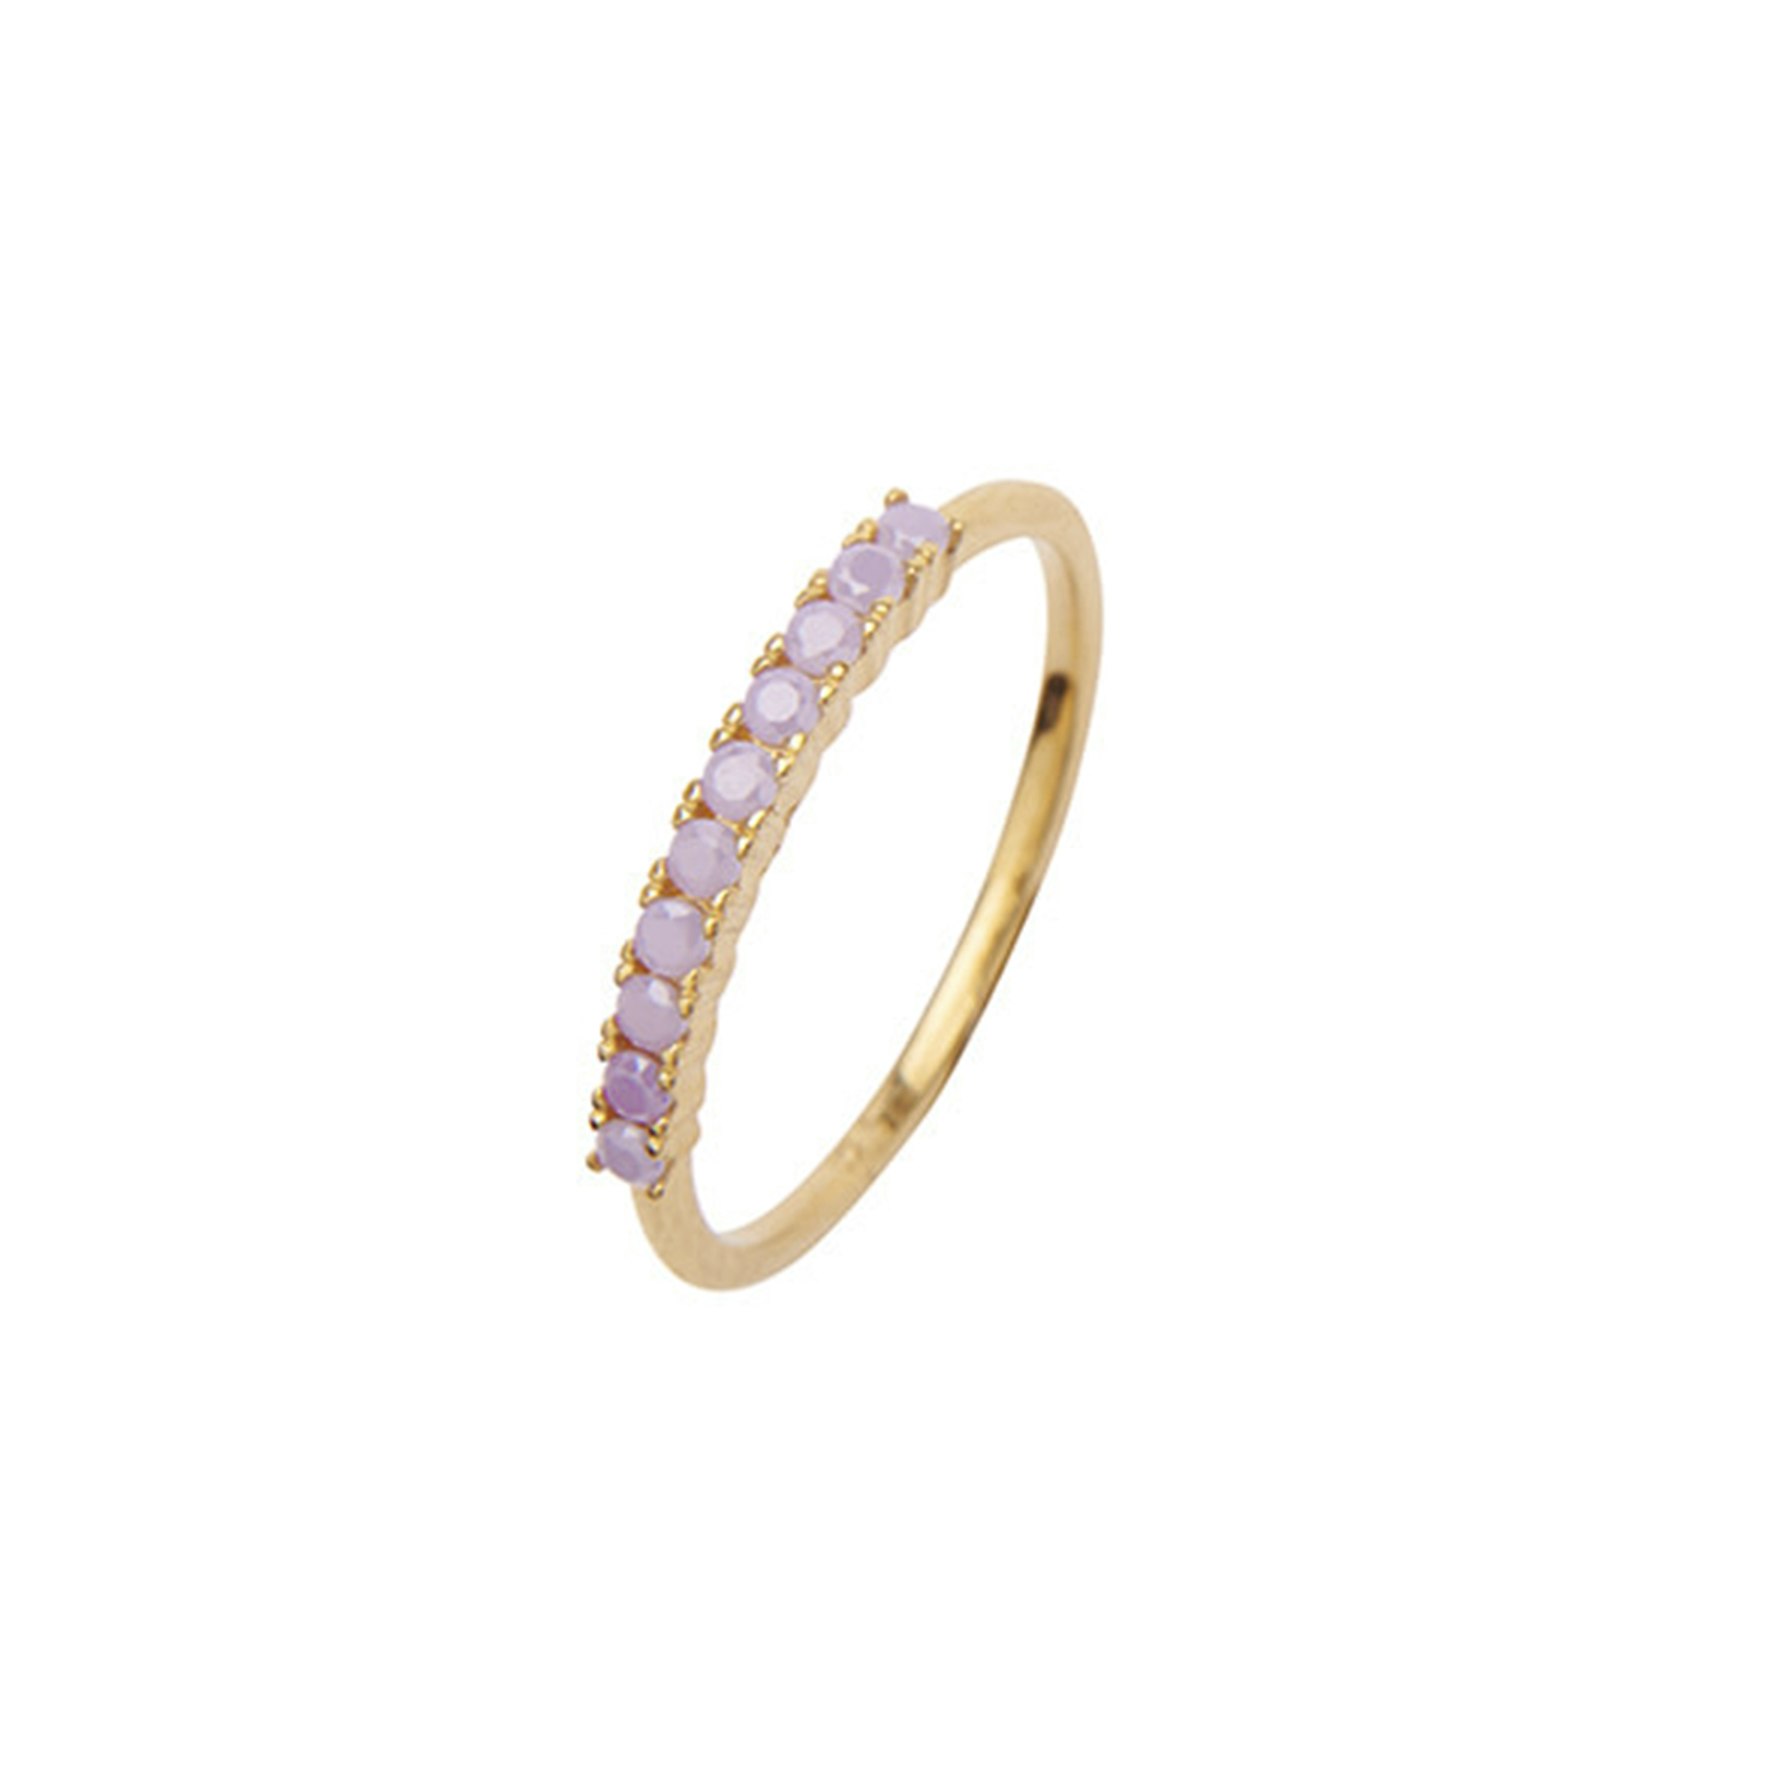 Fineley Crystal Ring Purple fra Pico i Forgylt-Sølv Sterling 925